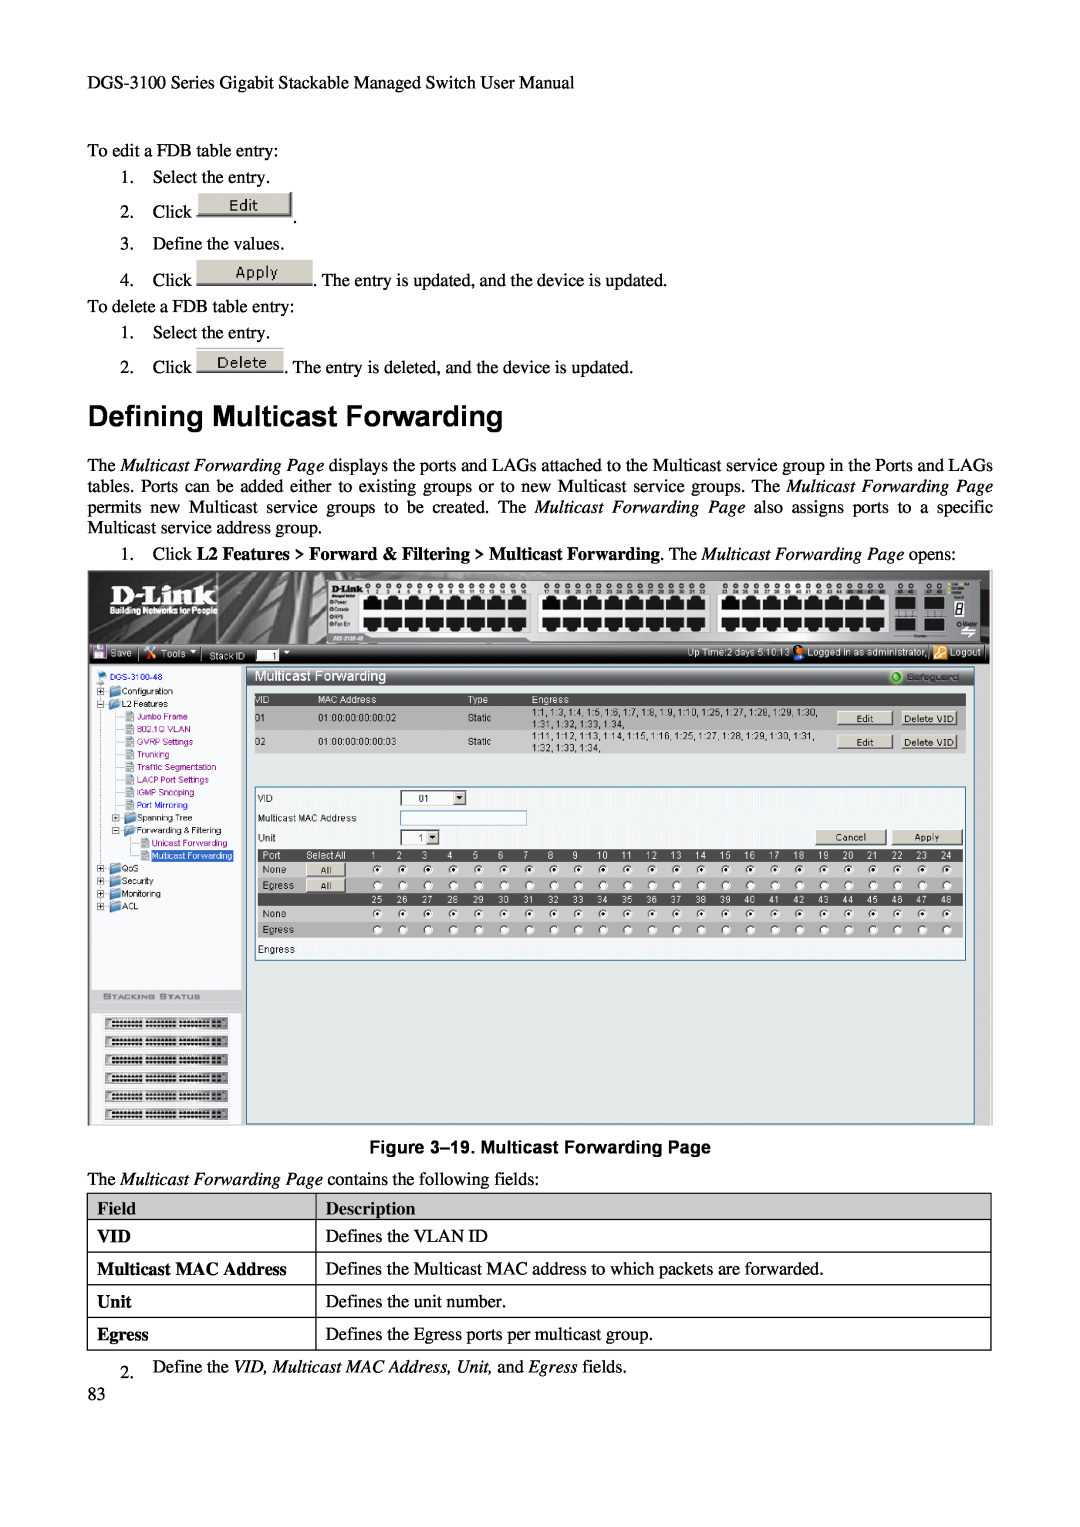 D-Link DGS-3100 Defining Multicast Forwarding, 19. Multicast Forwarding Page, Field, Description, Multicast MAC Address 